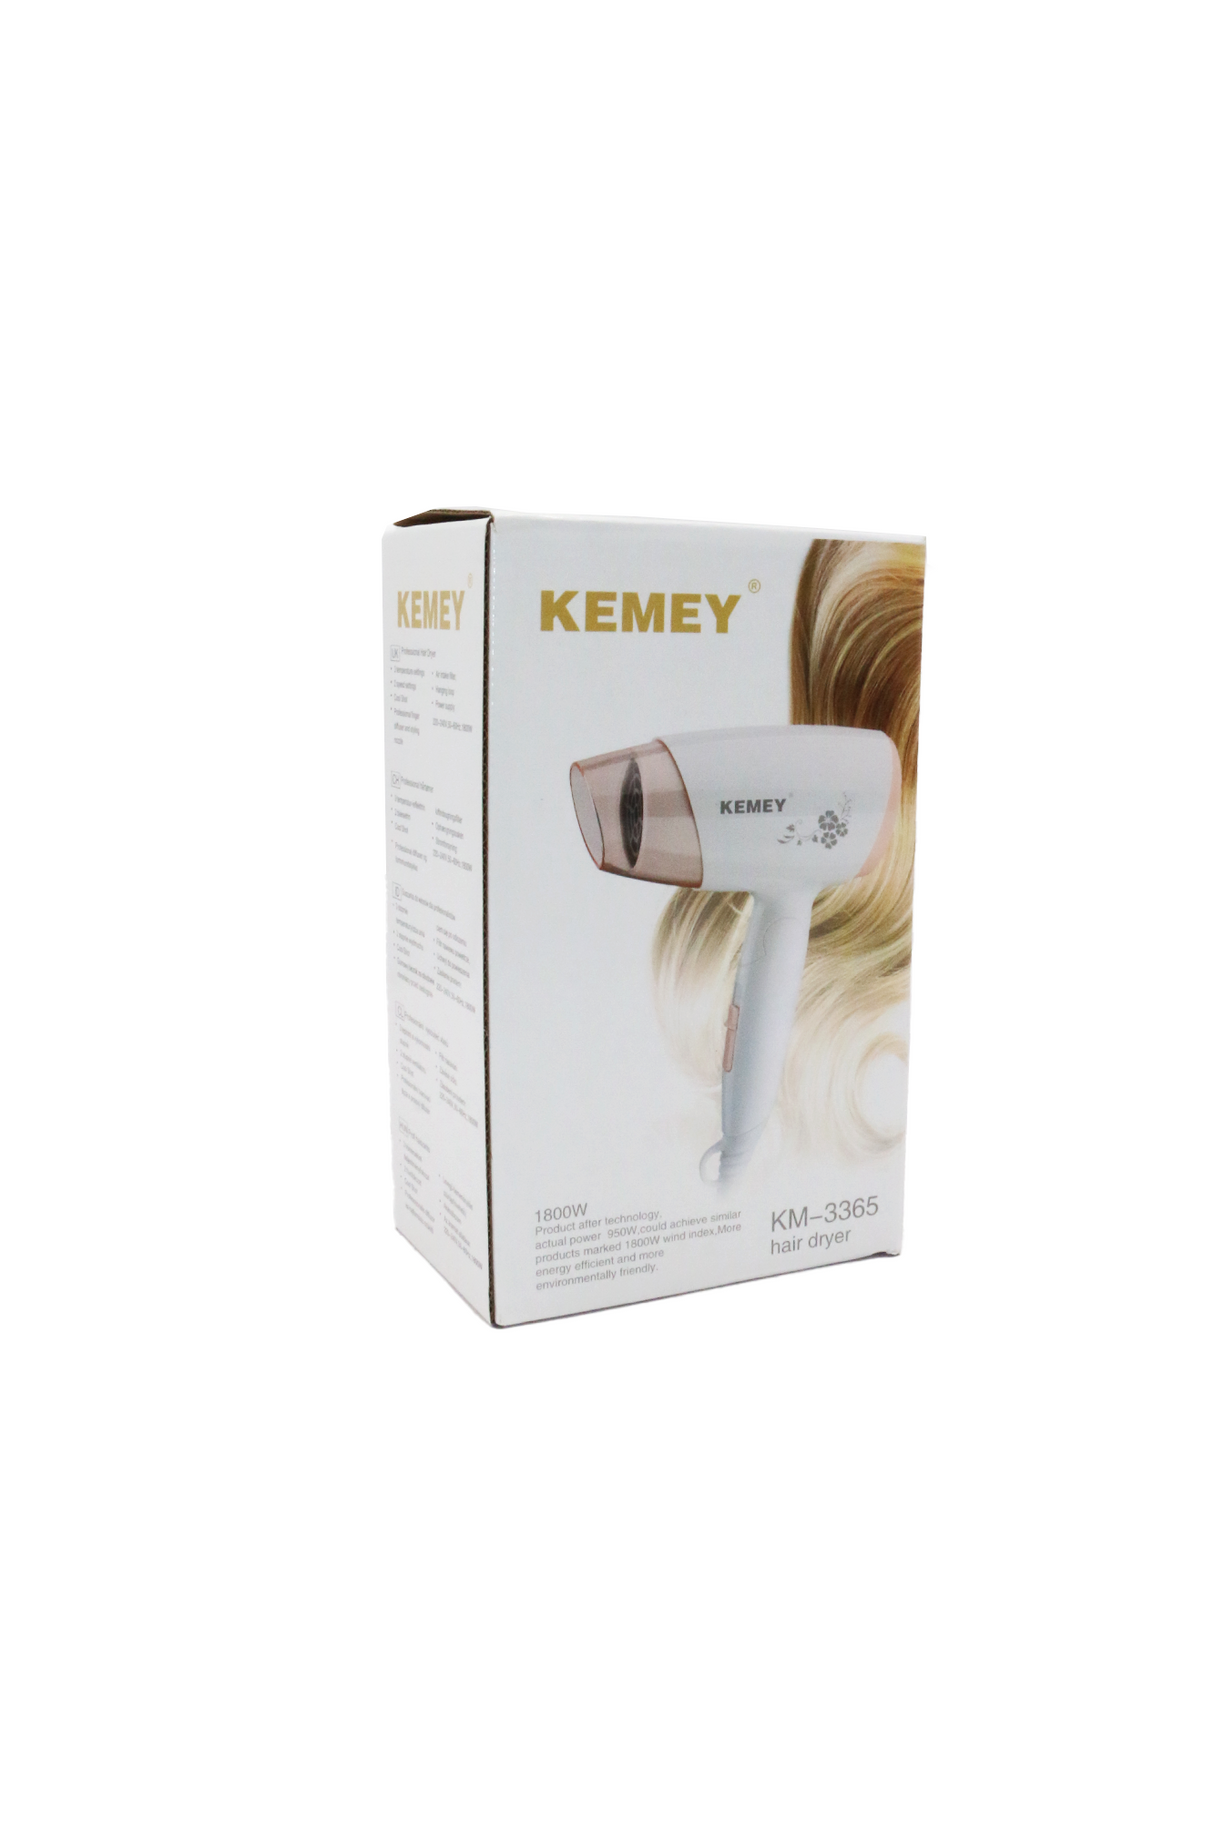 kemey hair dryer km-3365